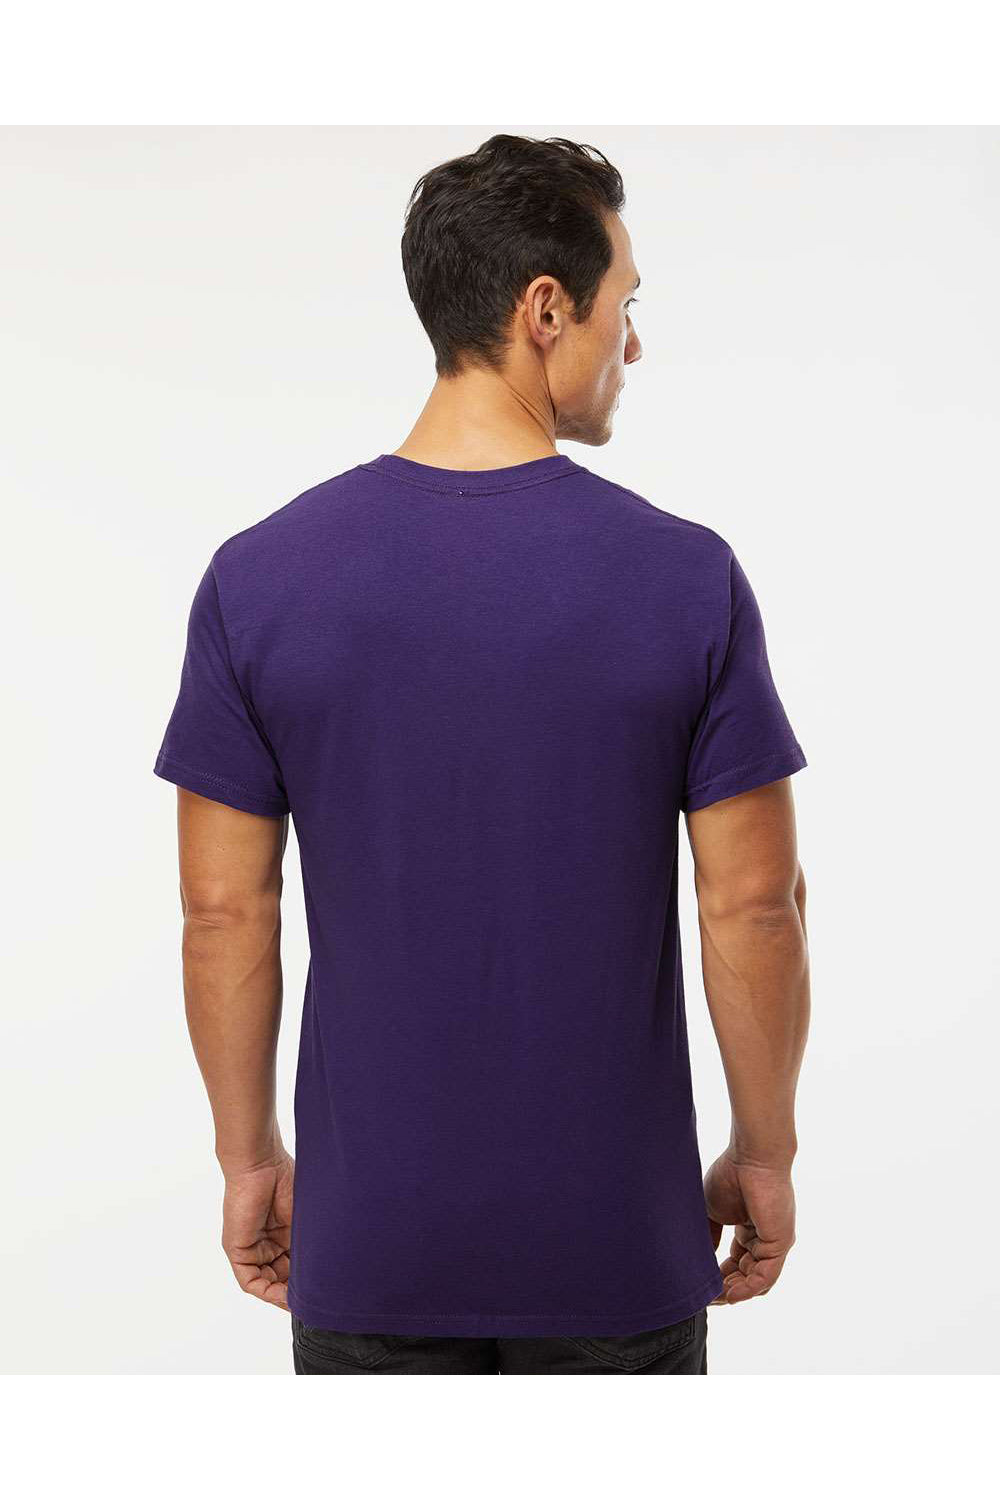 M&O 4800 Mens Gold Soft Touch Short Sleeve Crewneck T-Shirt Purple Model Back